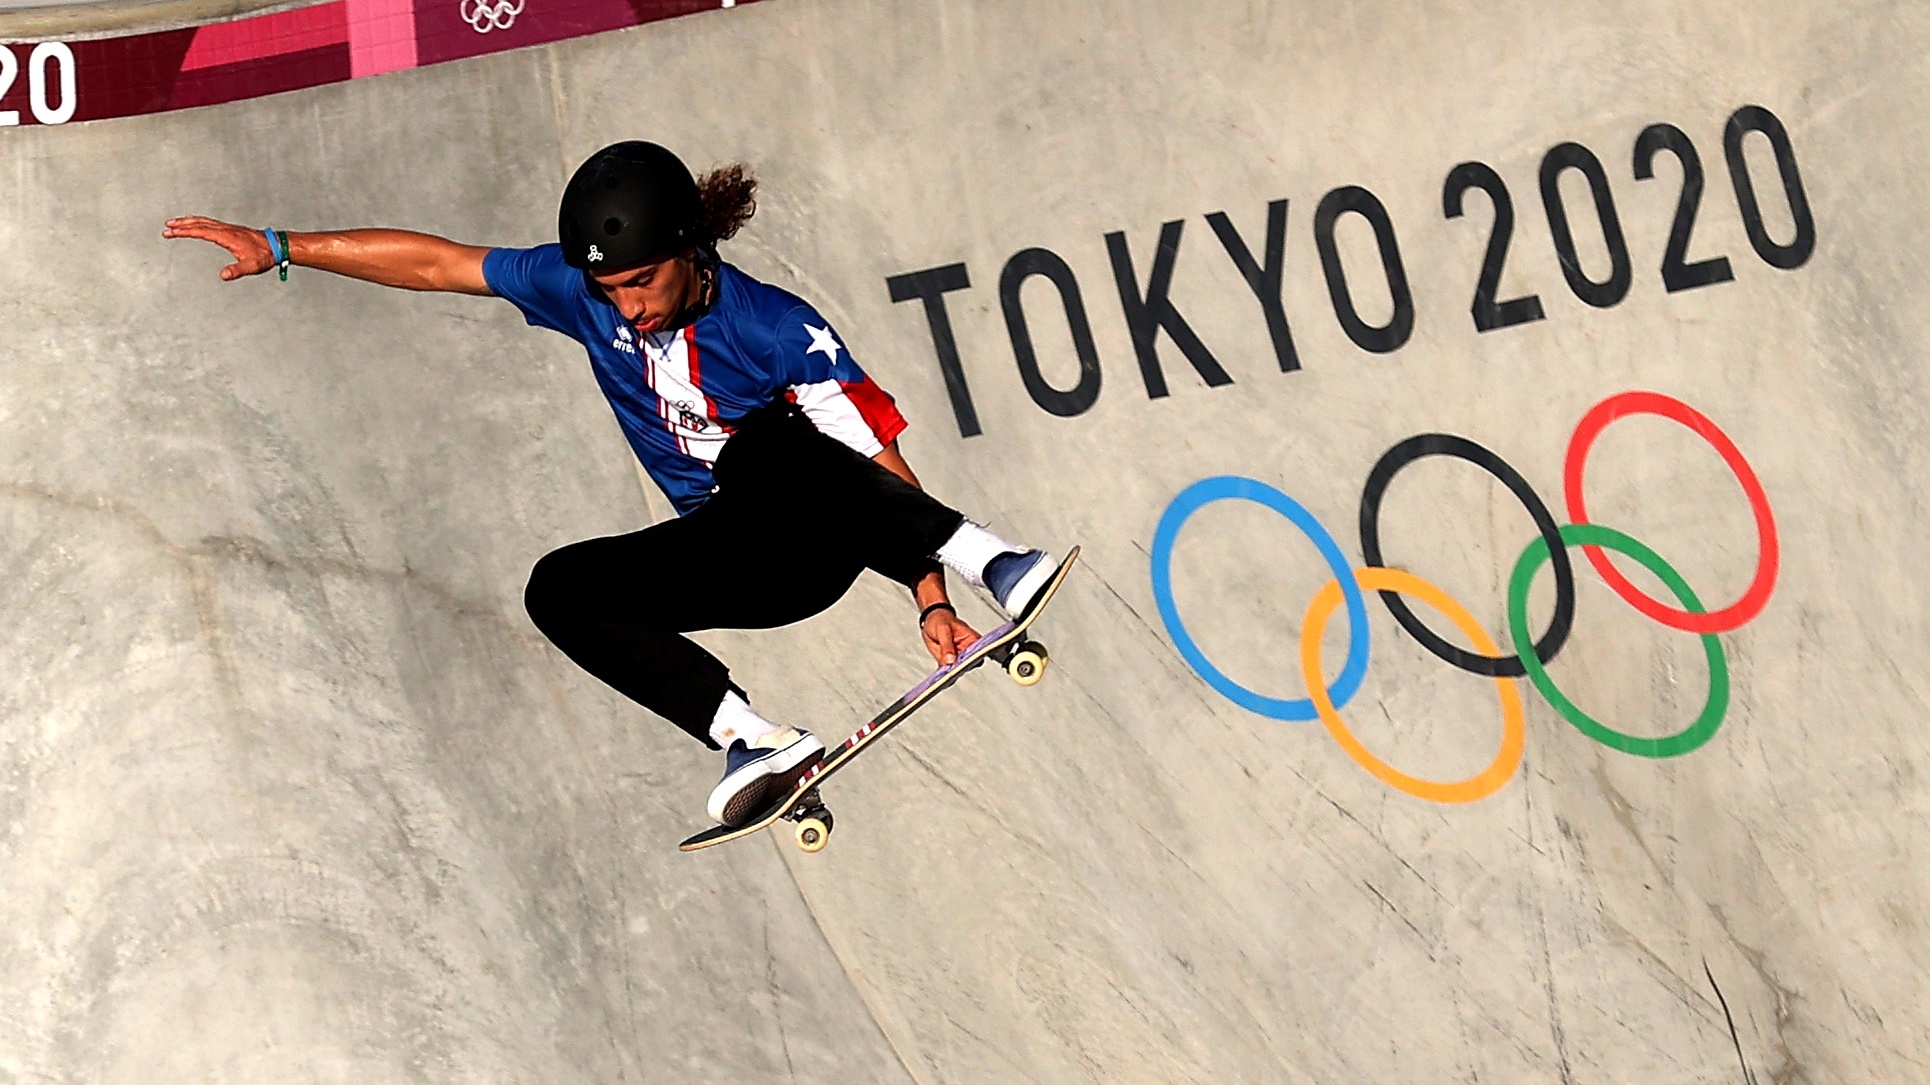 Skateboarding: Incredible skateboard tricks at 2020 Summer Olympics in Tokyo, Japan. 1930x1090 HD Wallpaper.